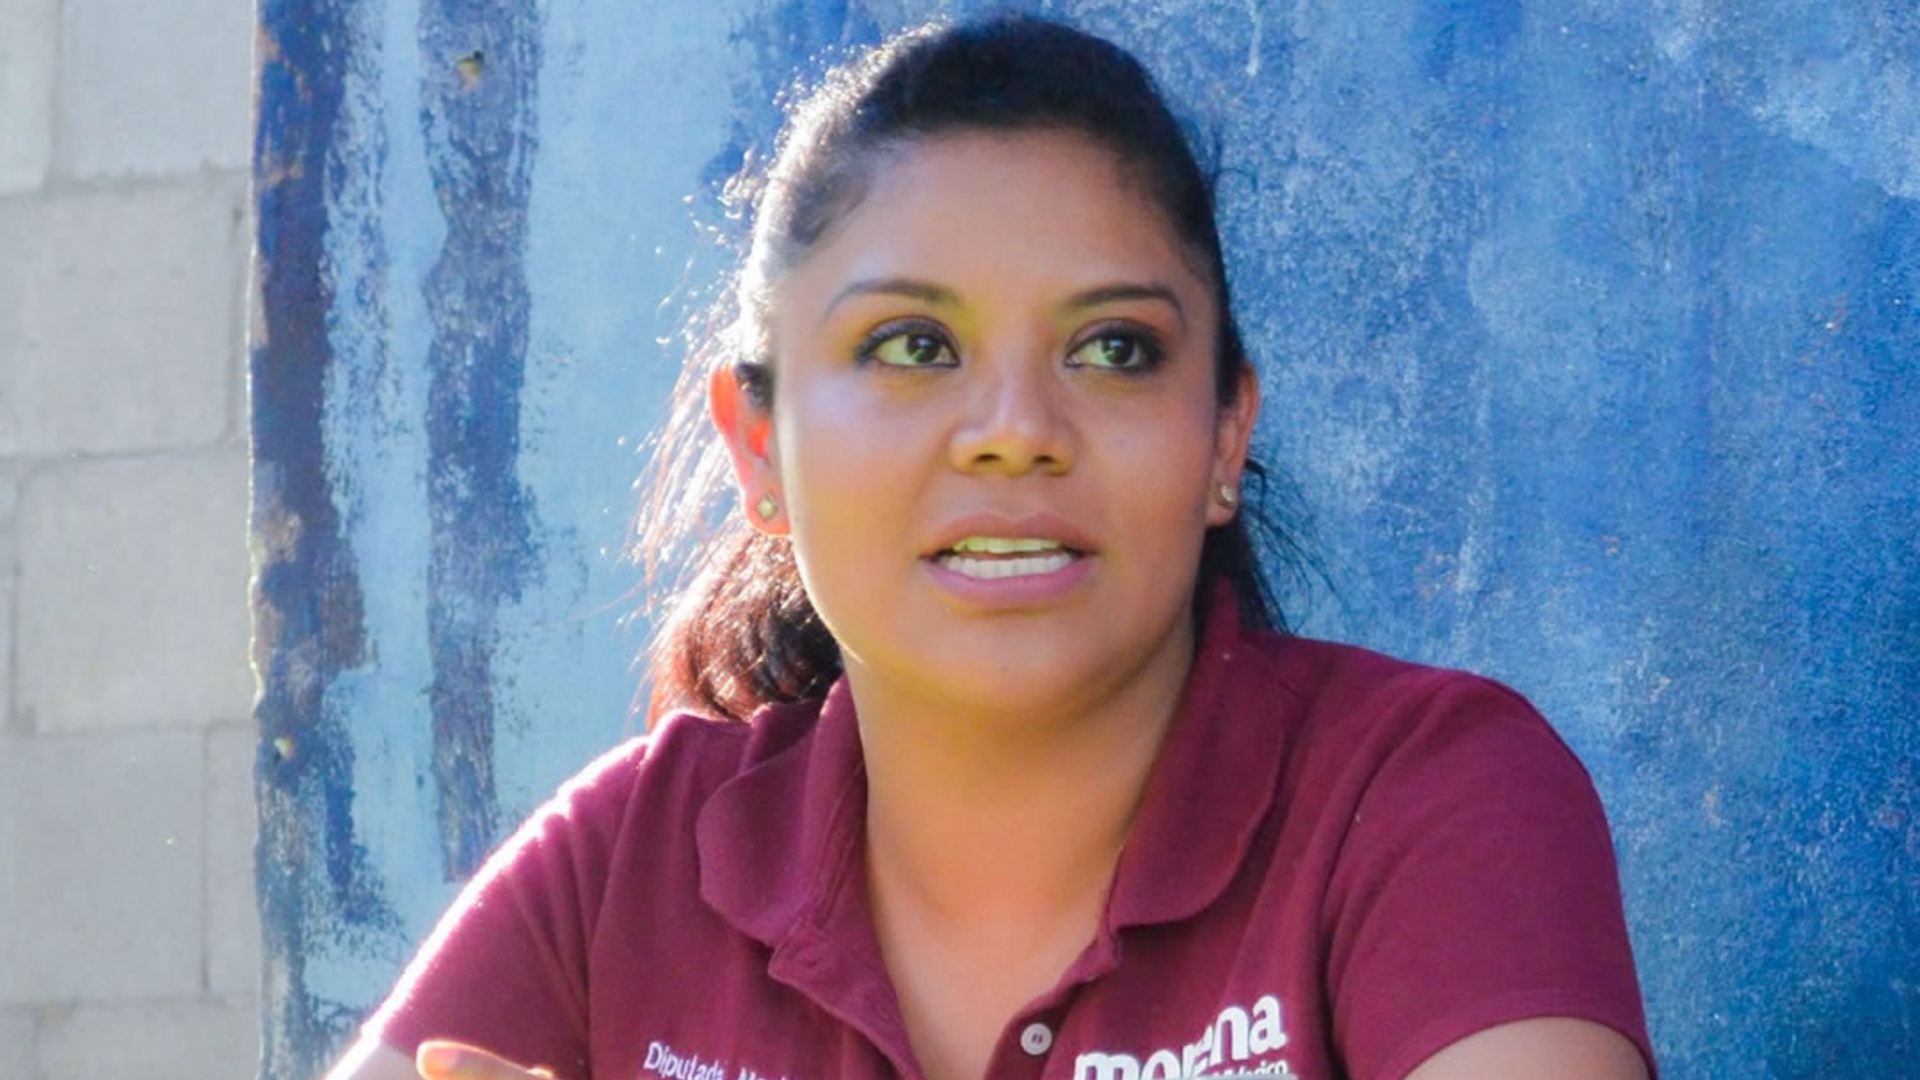 “El que entendió, entendió”: Montserrat Caballero insistió en sus declaraciones sobre “pago de facturas” al narco